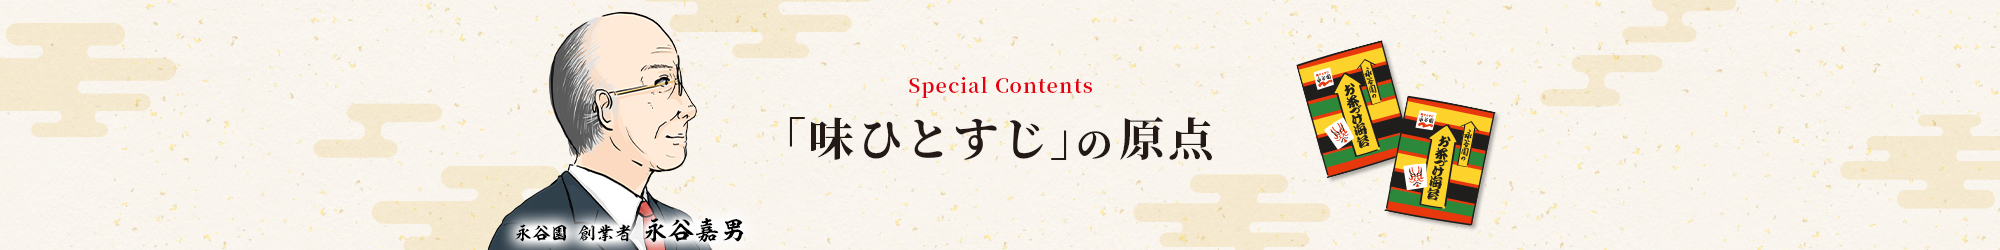 Special Contents「味ひとすじ」の原点